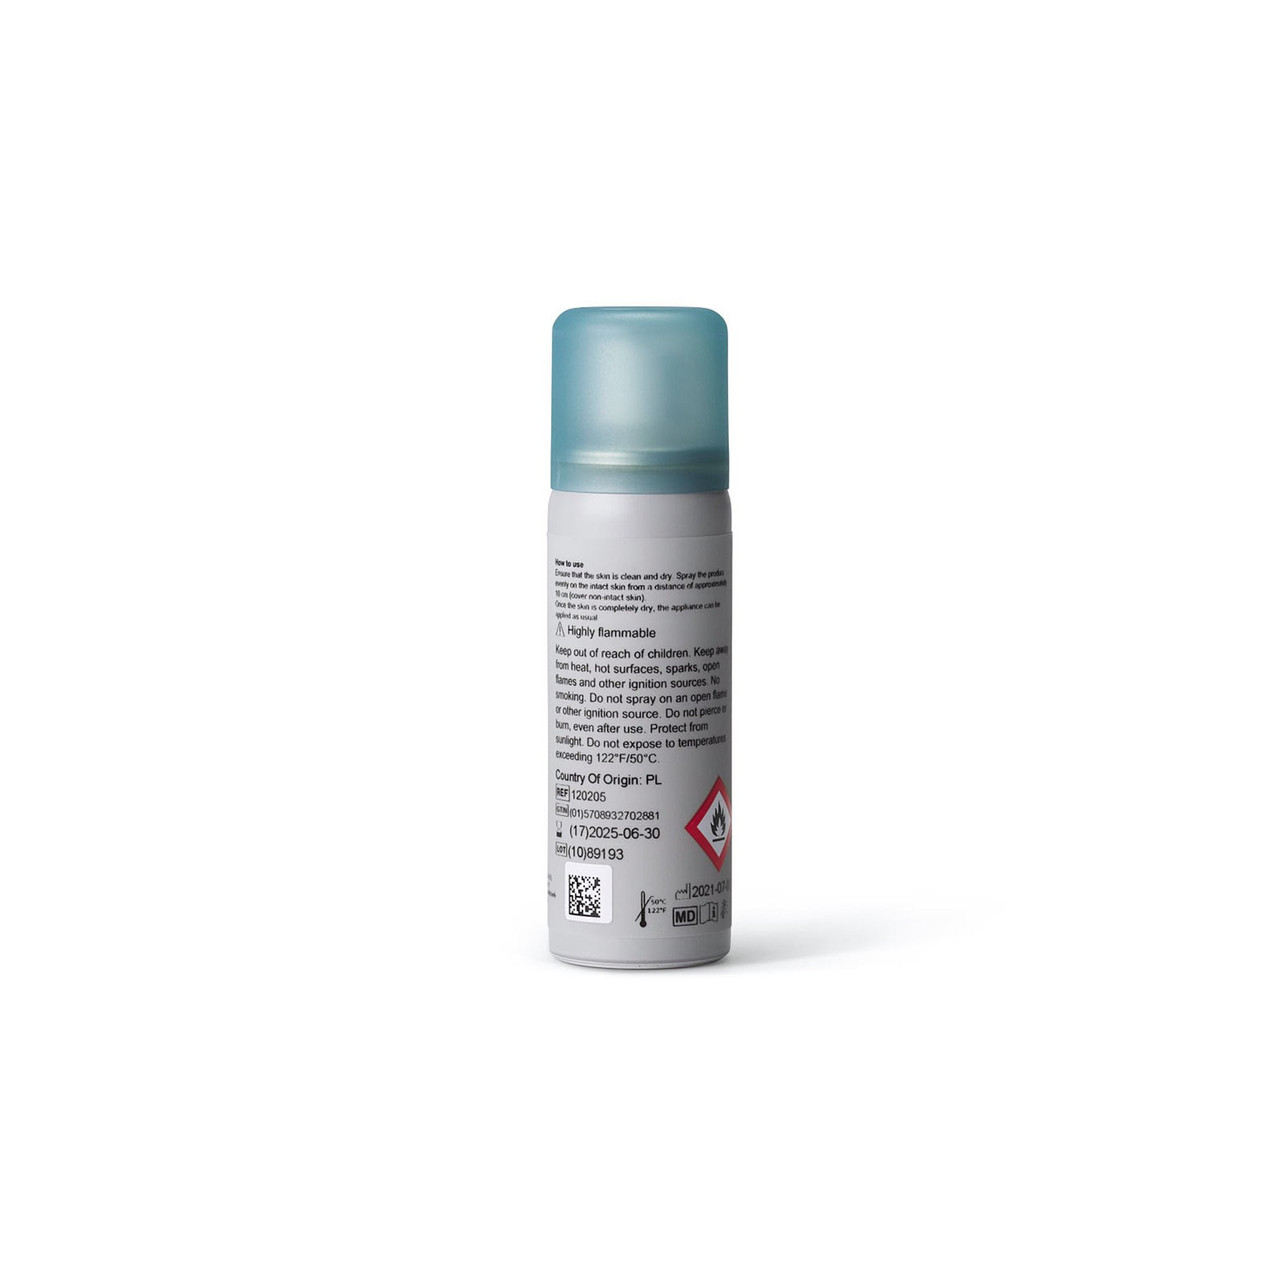 Coloplast Brava Adhesive Remover Spray - 1.7 oz (120105) for sale online